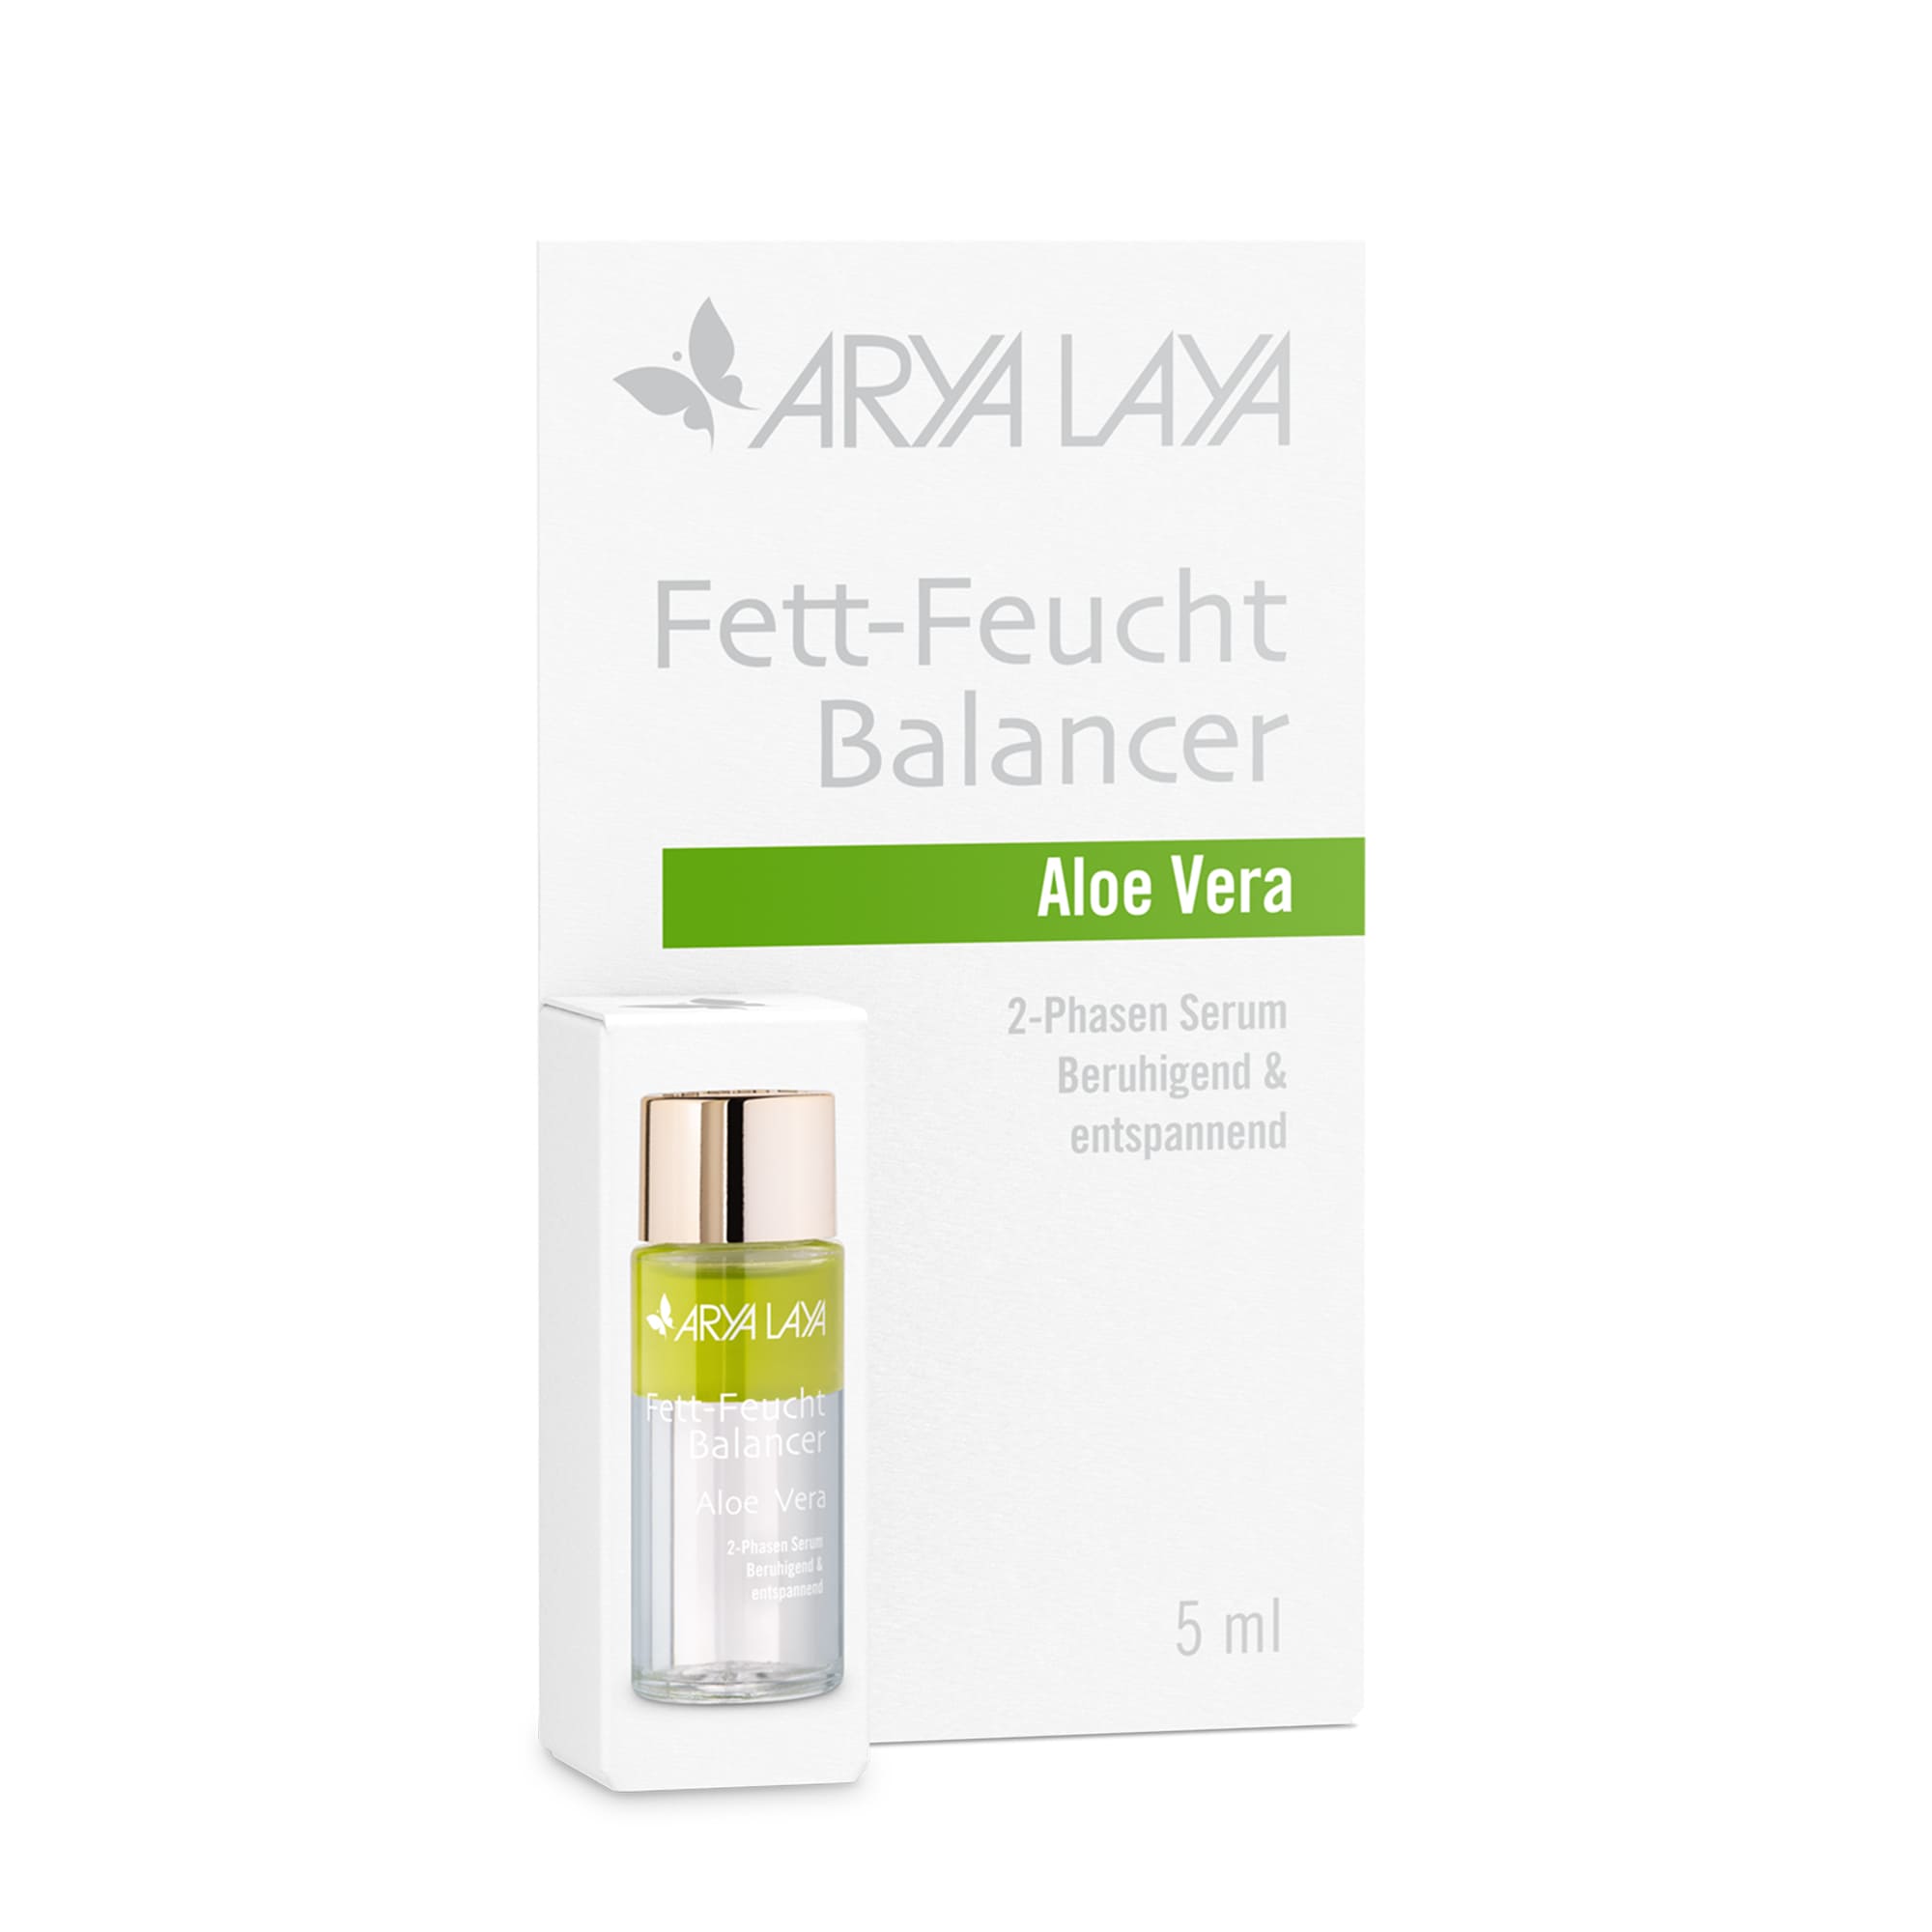 ARYA LAYA Fett-Feucht Balancer Aloe Vera Probiergröße, 5 ml